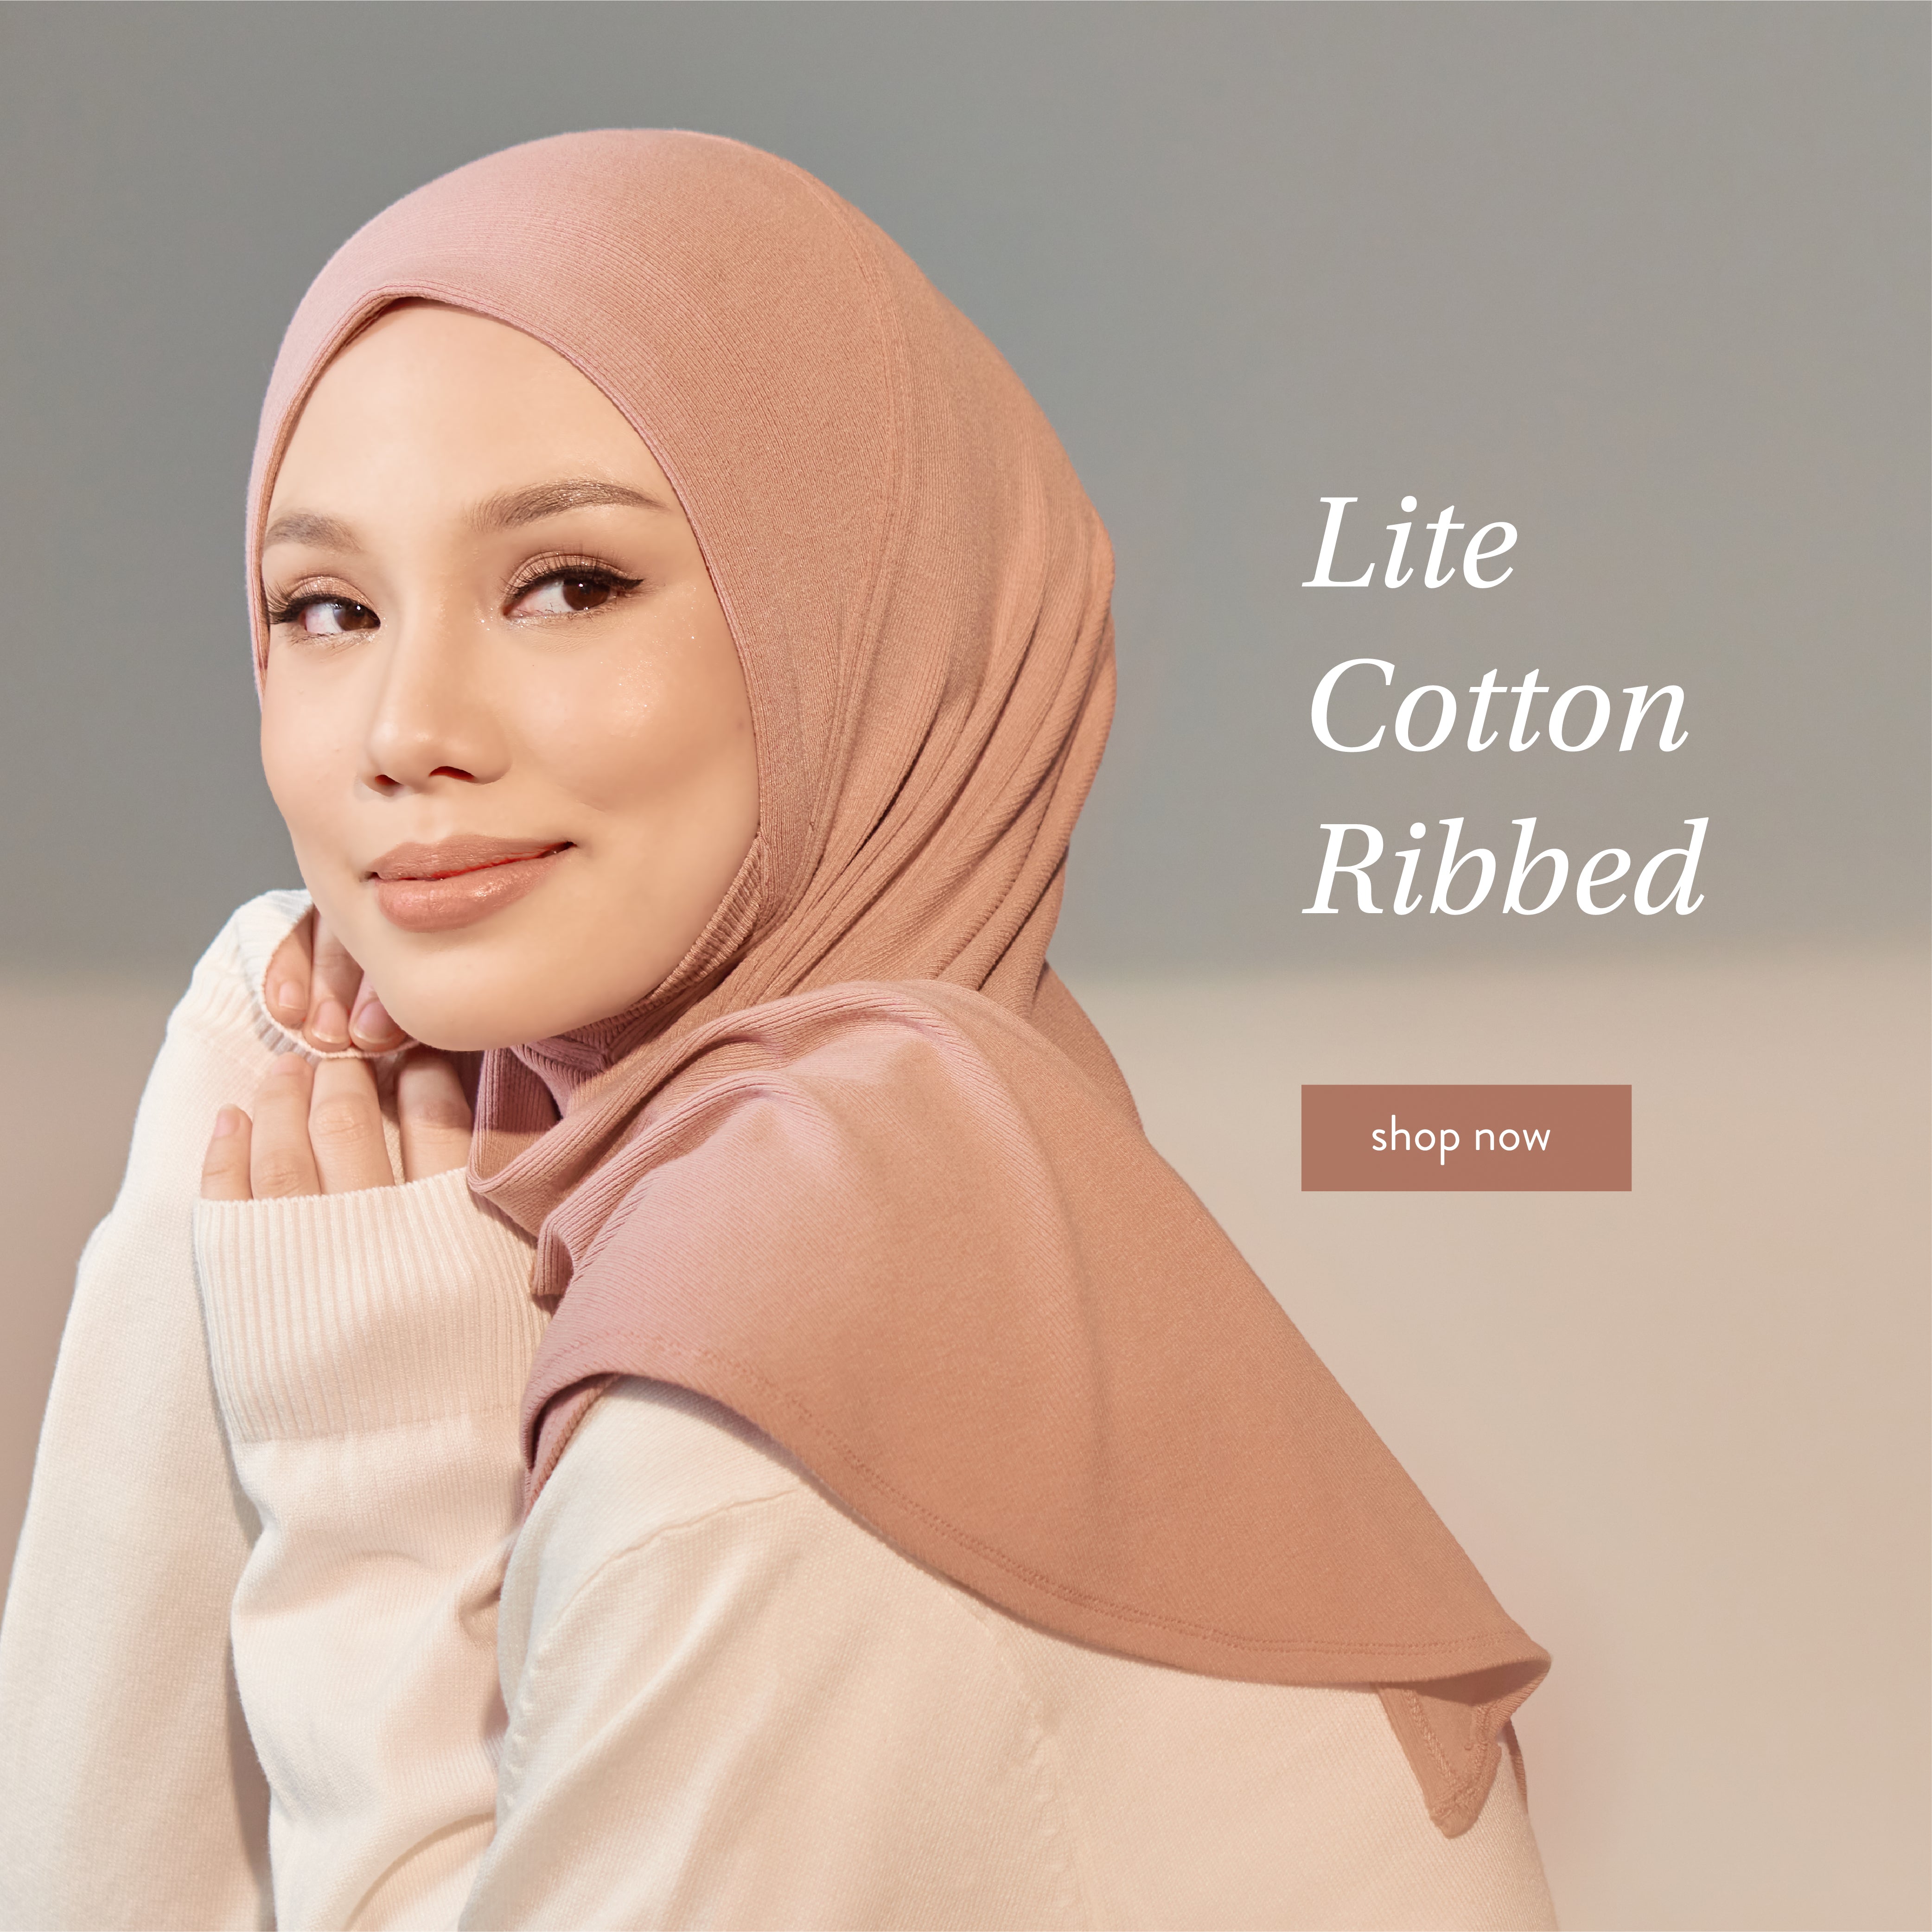 Lite Cotton Ribbed